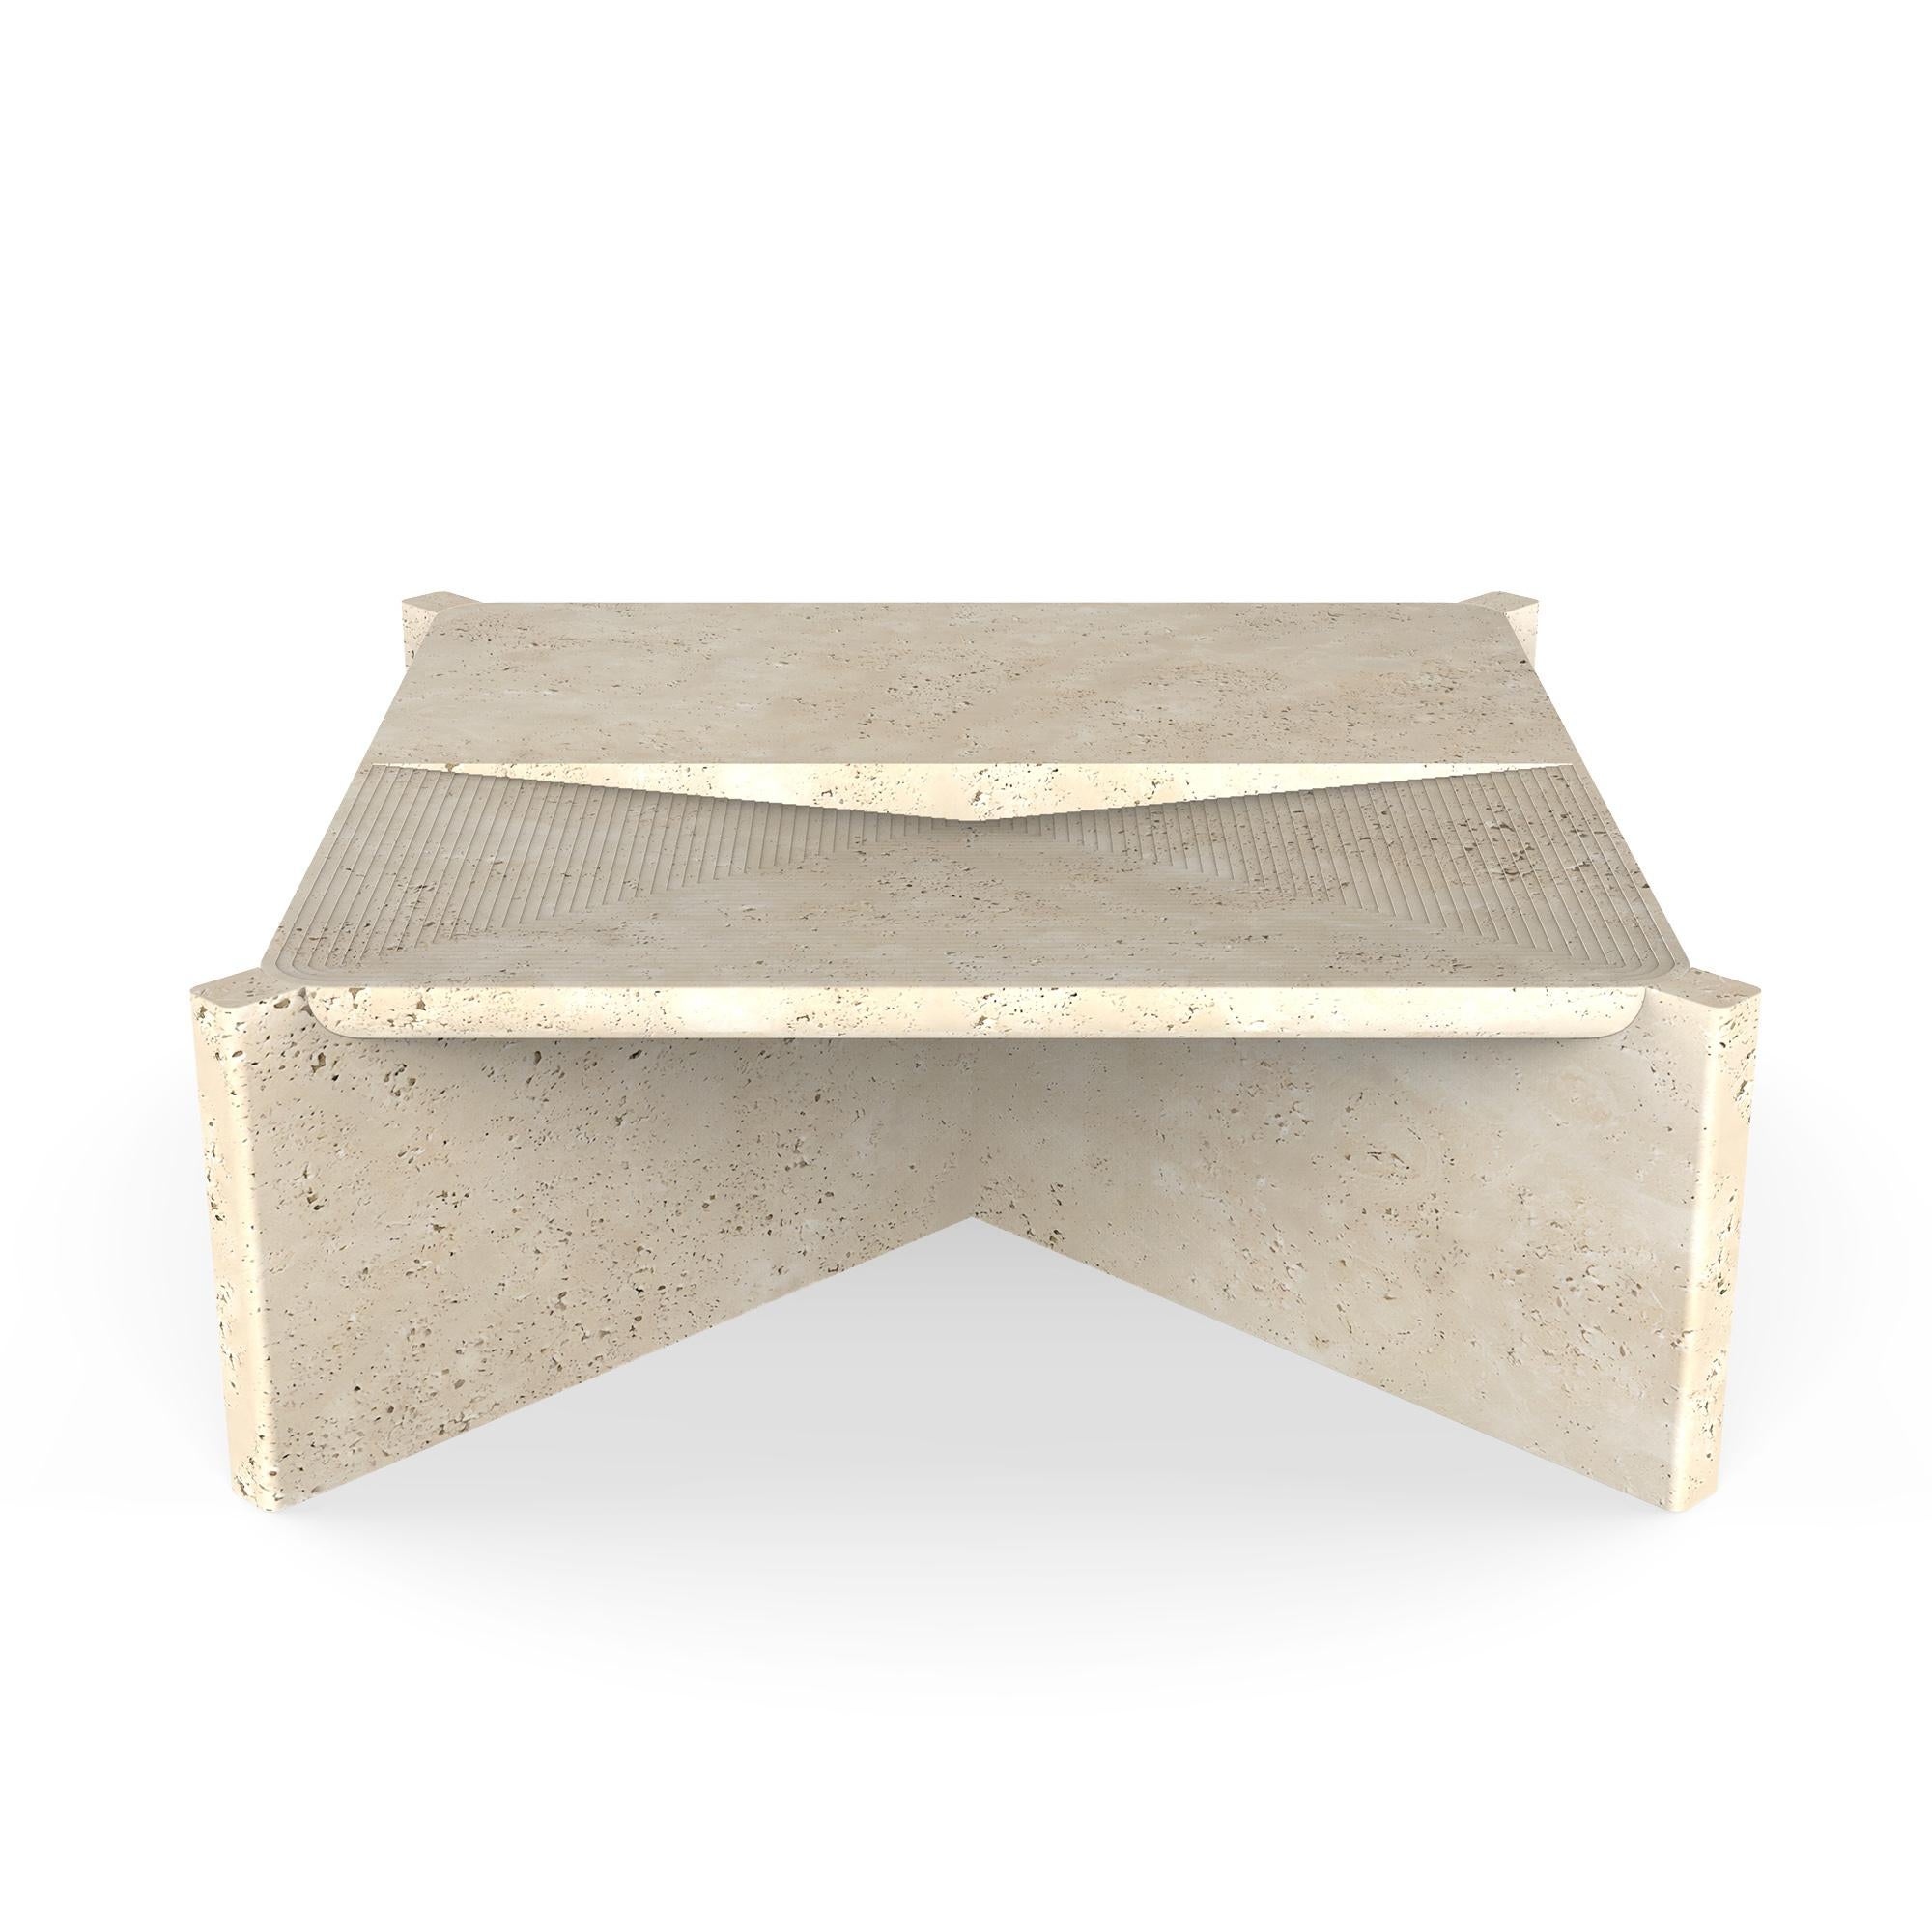 Moderne Table basse carrée en travertin Arkhe No 1, sculpturale moderne de Fulden Topaloglu en vente